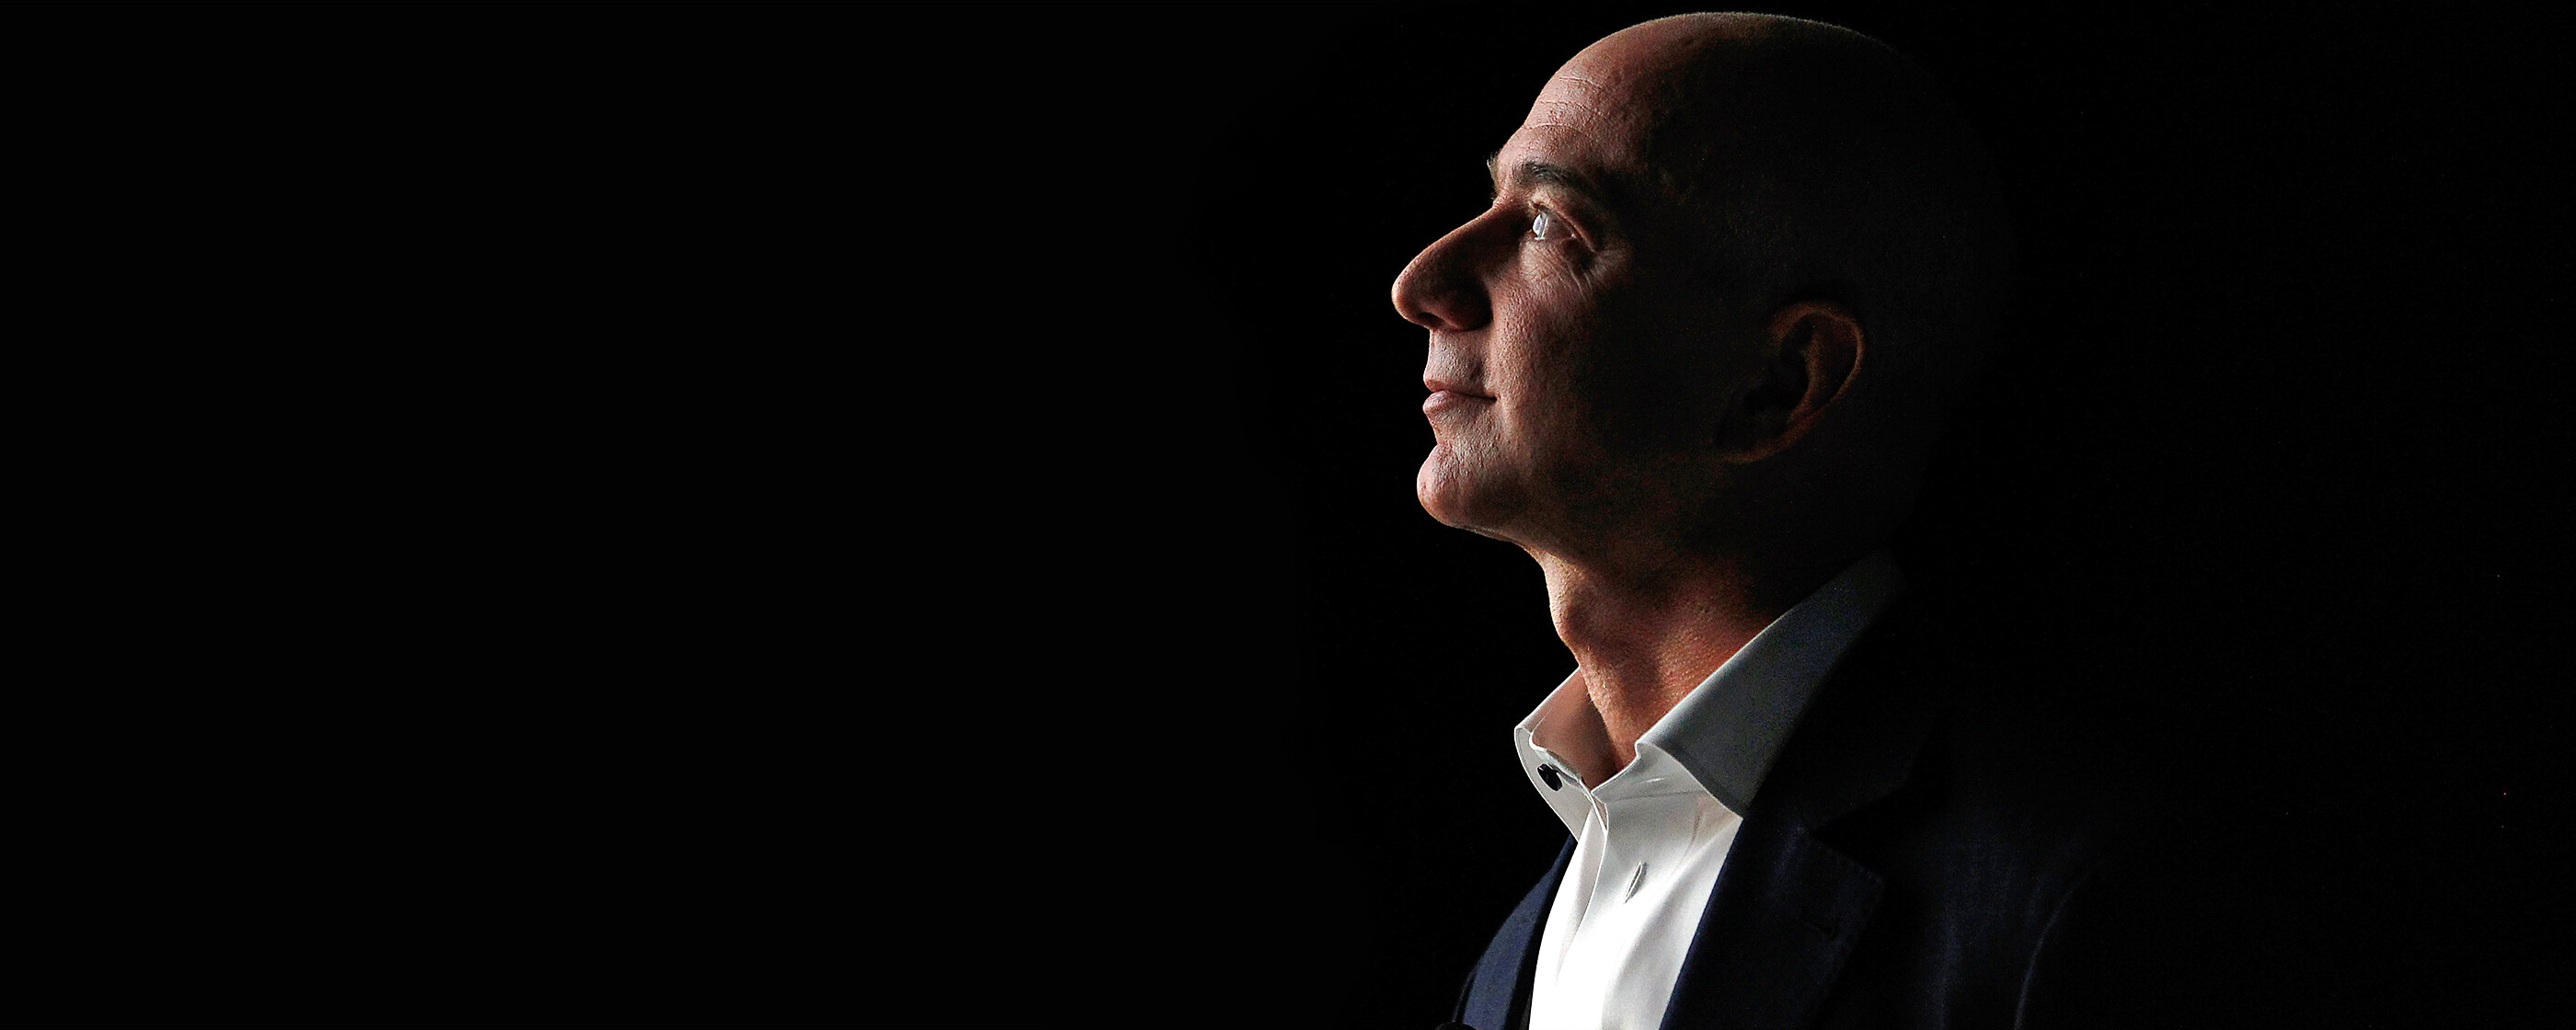 Jeff Bezos: One of the US' biggest landowners. 2800x1120 Dual Screen Wallpaper.